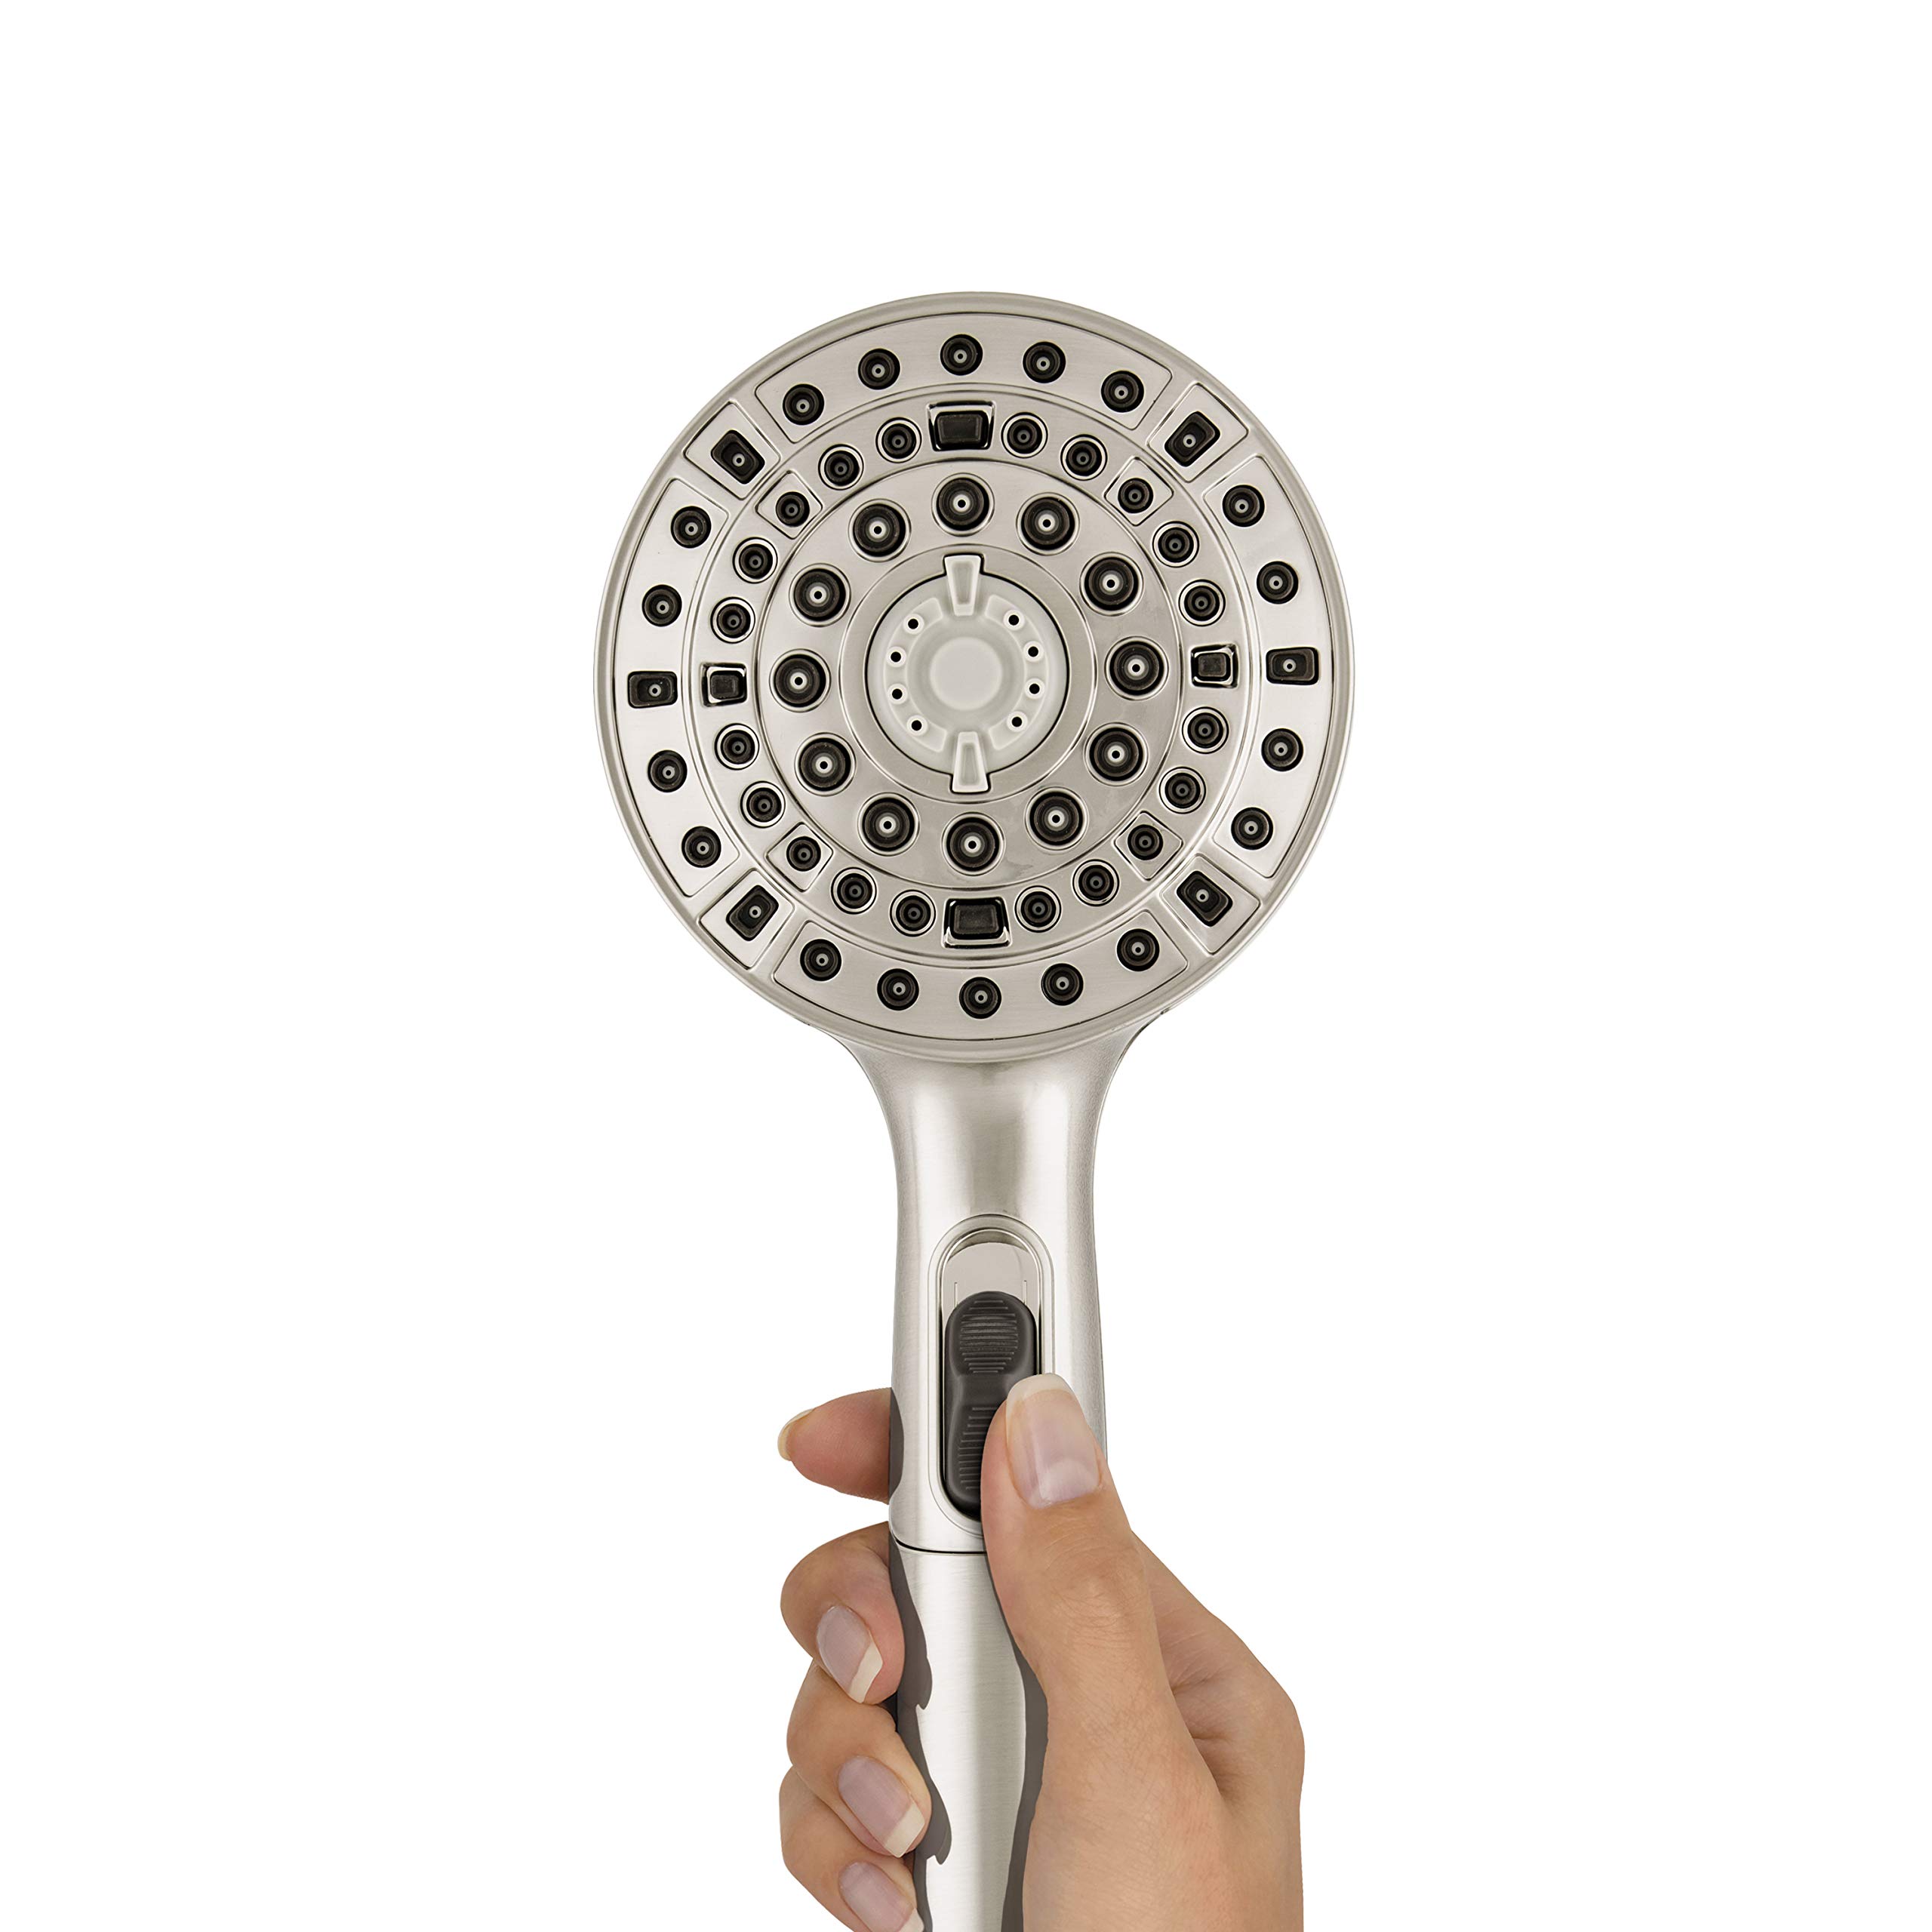 Waterpik 7-Mode PowerPulse Massage Hand Held Brushed Nickel Shower Head with EasySelect. VOT-669E?